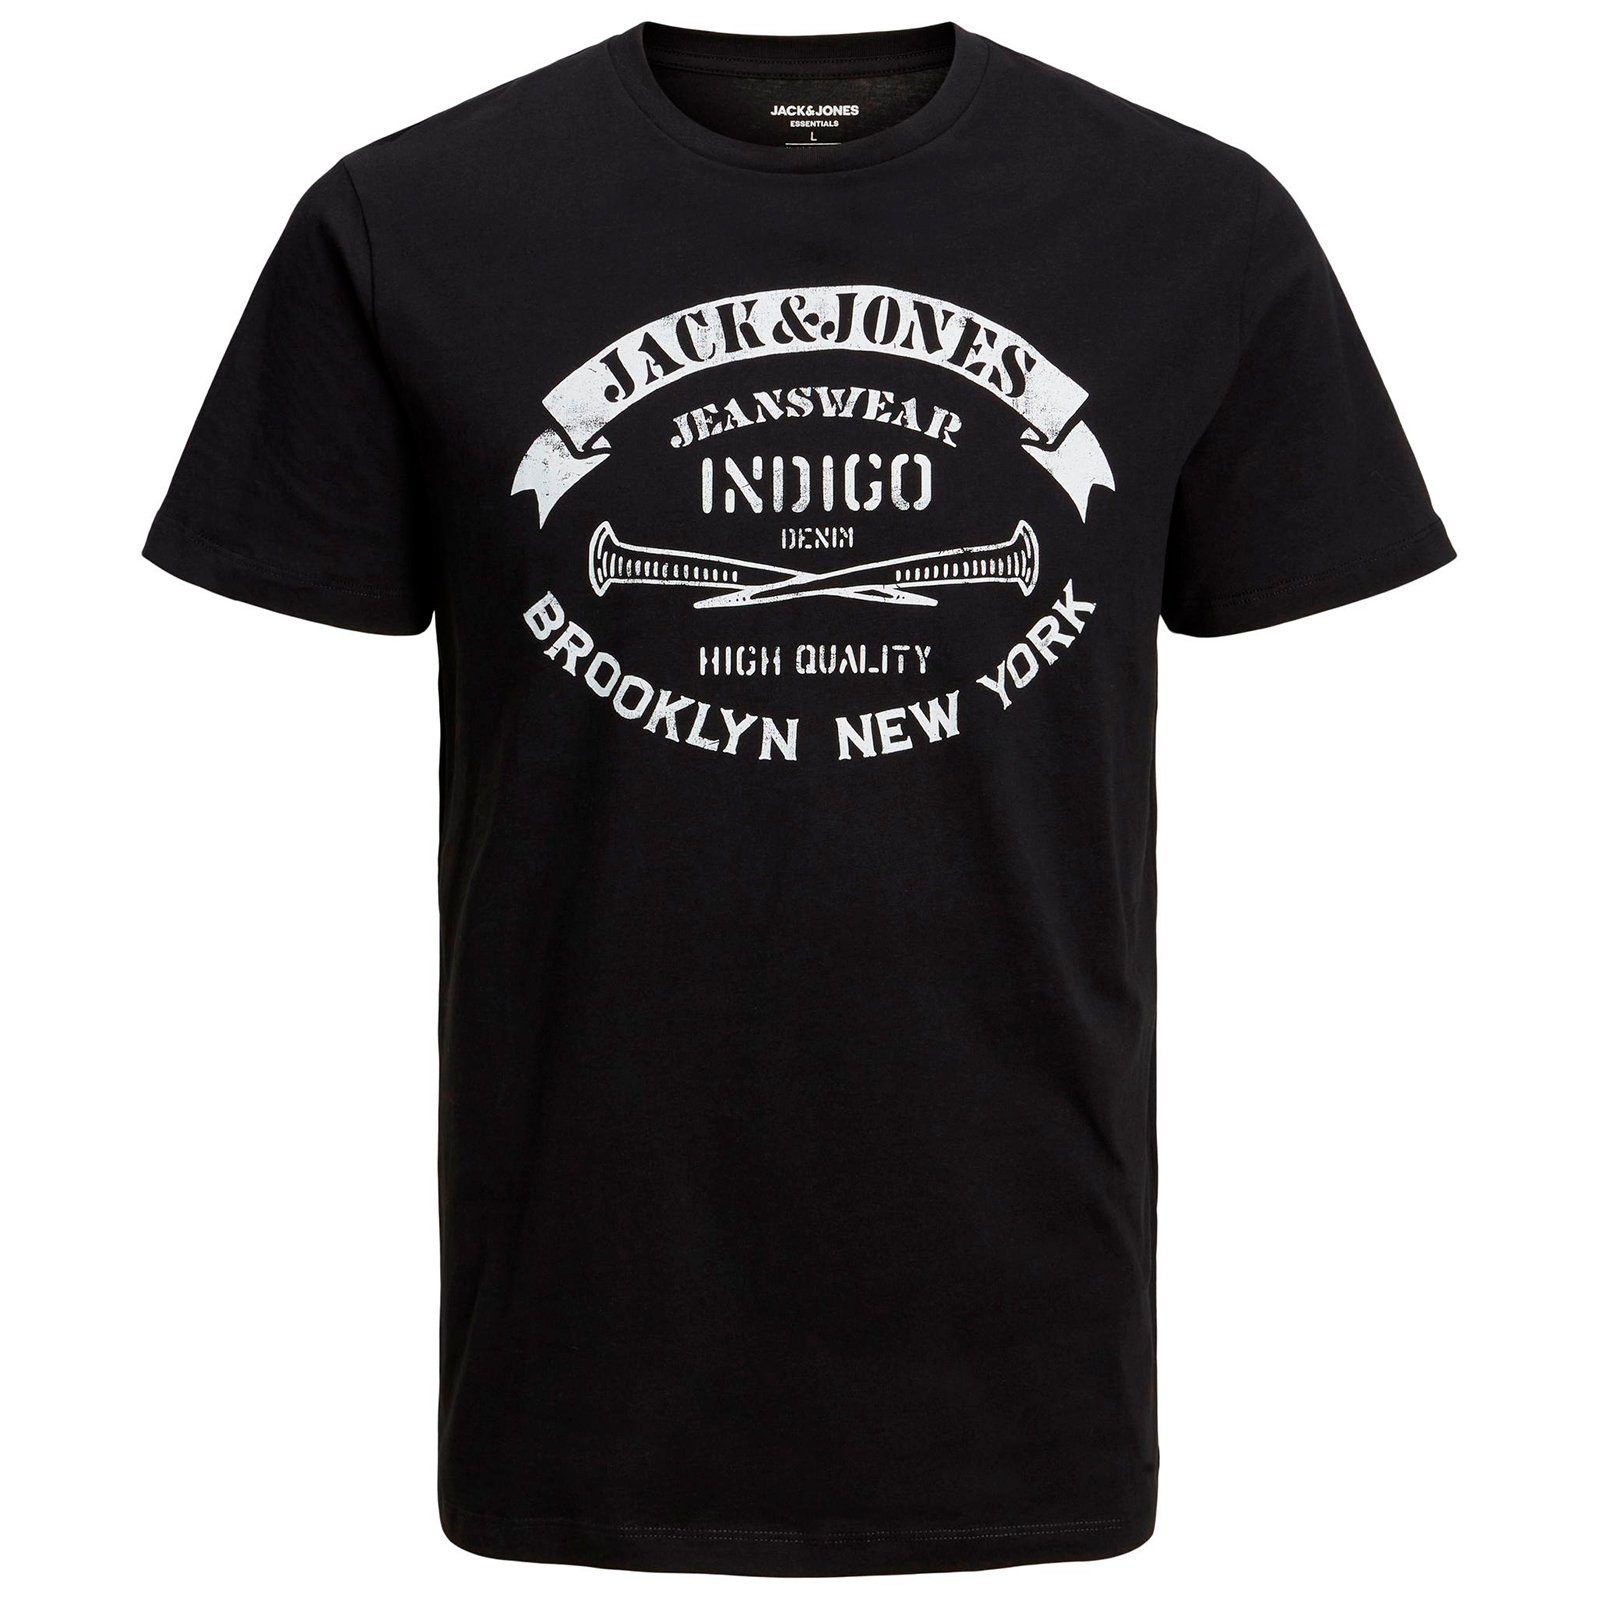 Rundhalsshirt T-Shirt schwarz Größen Label-Print Große Jack Herren Jack&Jones & Jones